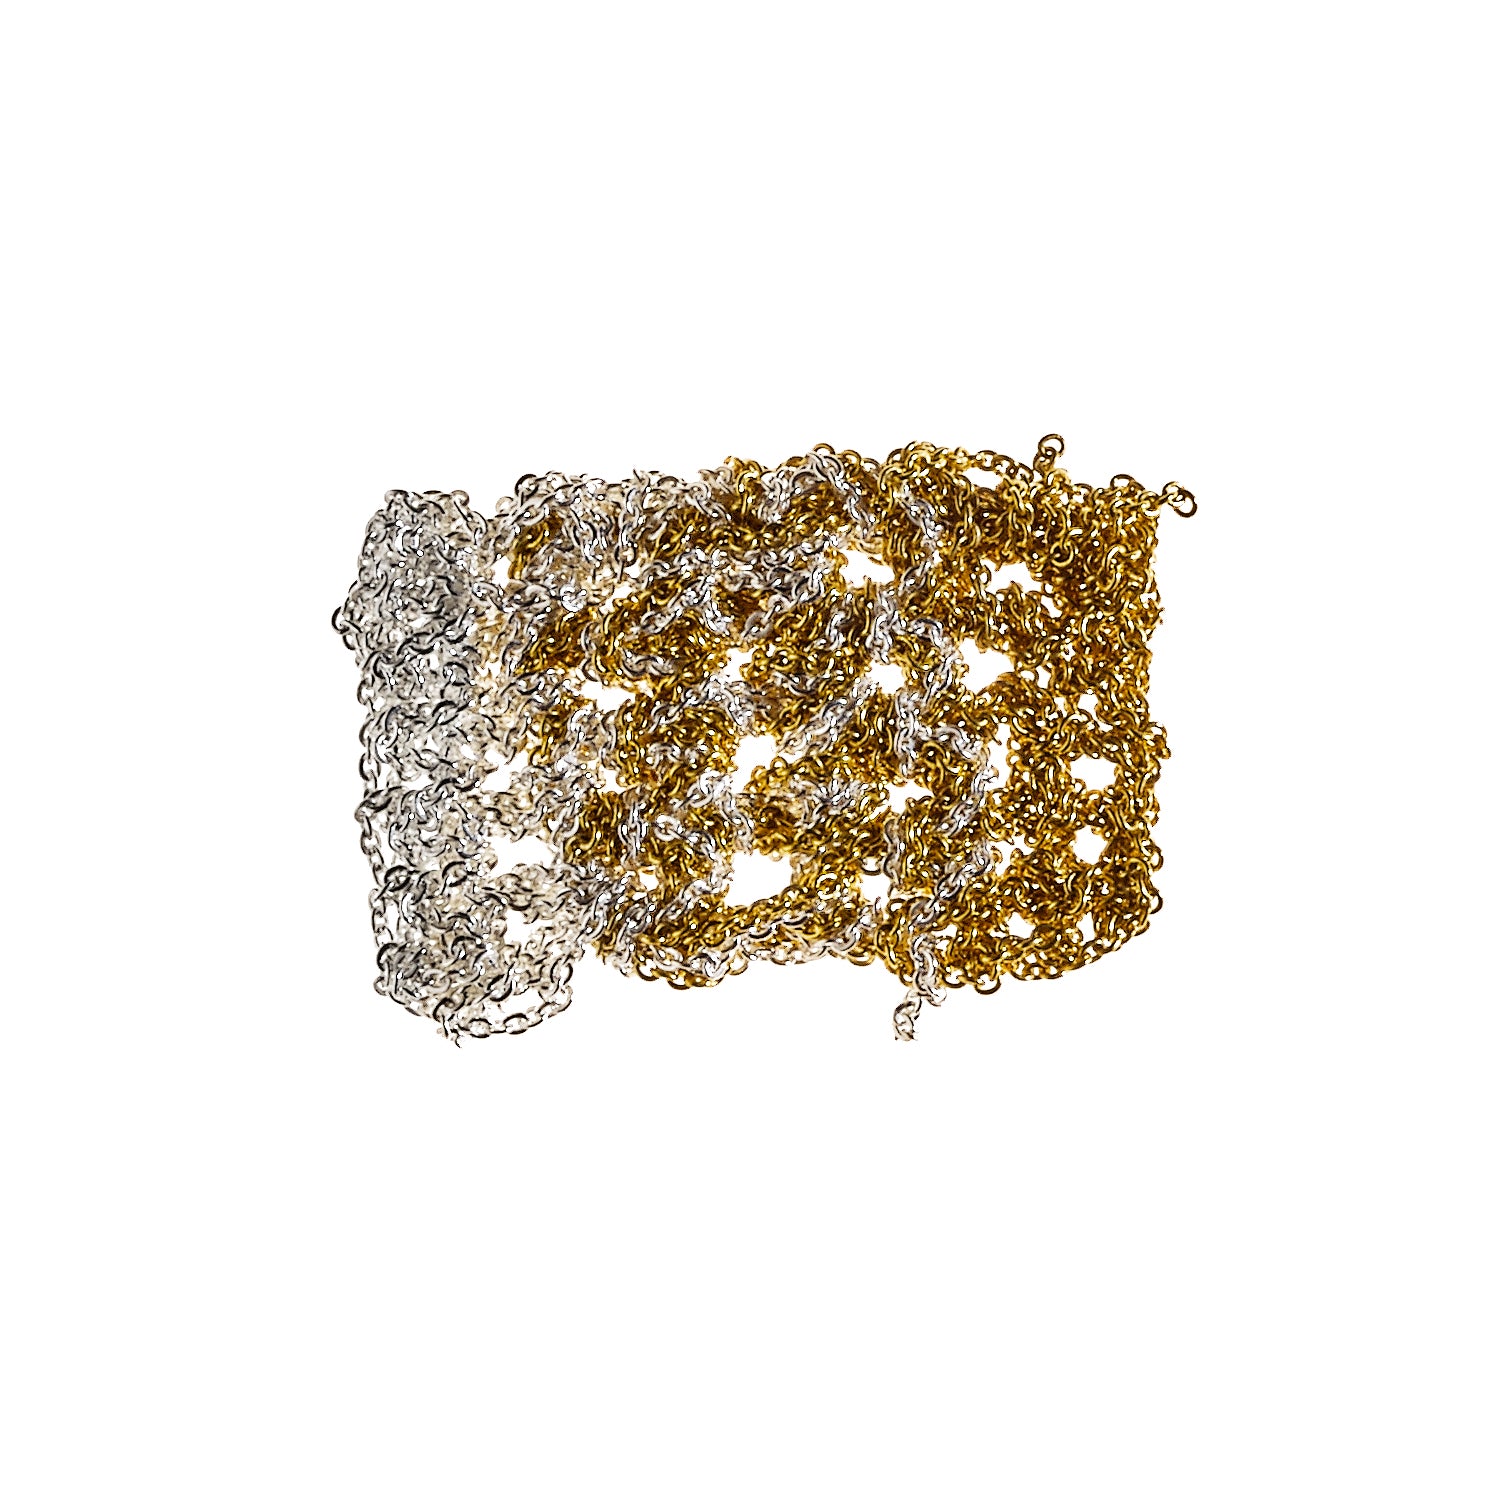 2-Tone Bare Chain Bracelet in Gold + Silver